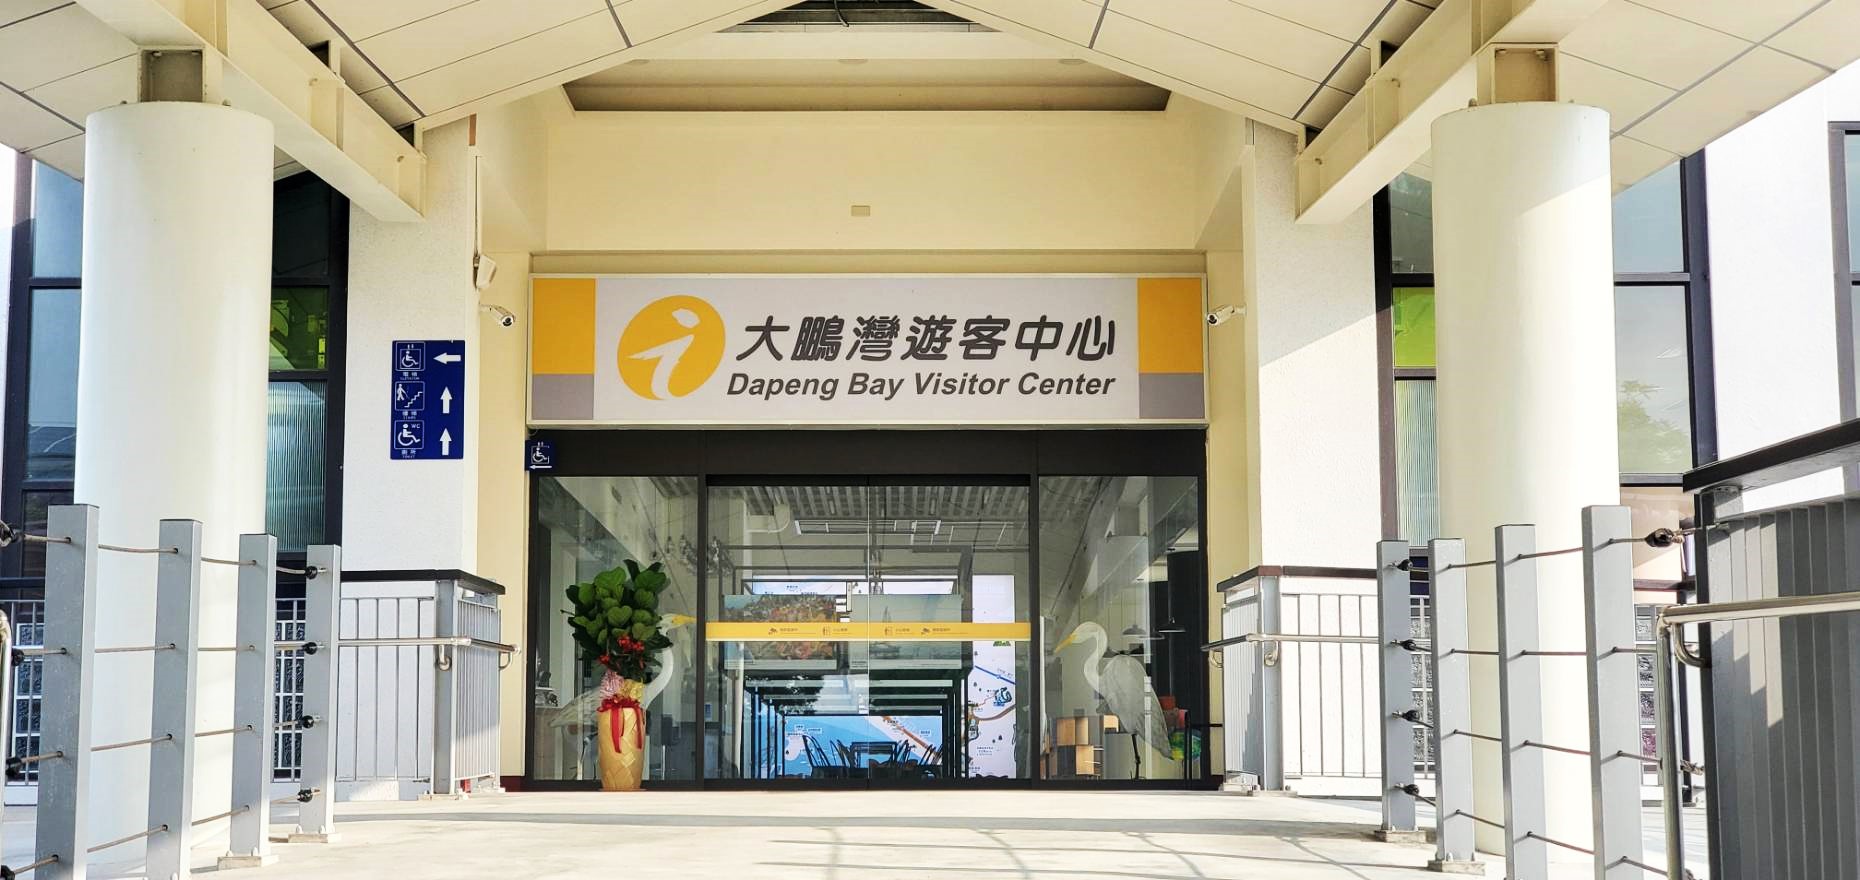 Dapeng Bay Visitor Center close